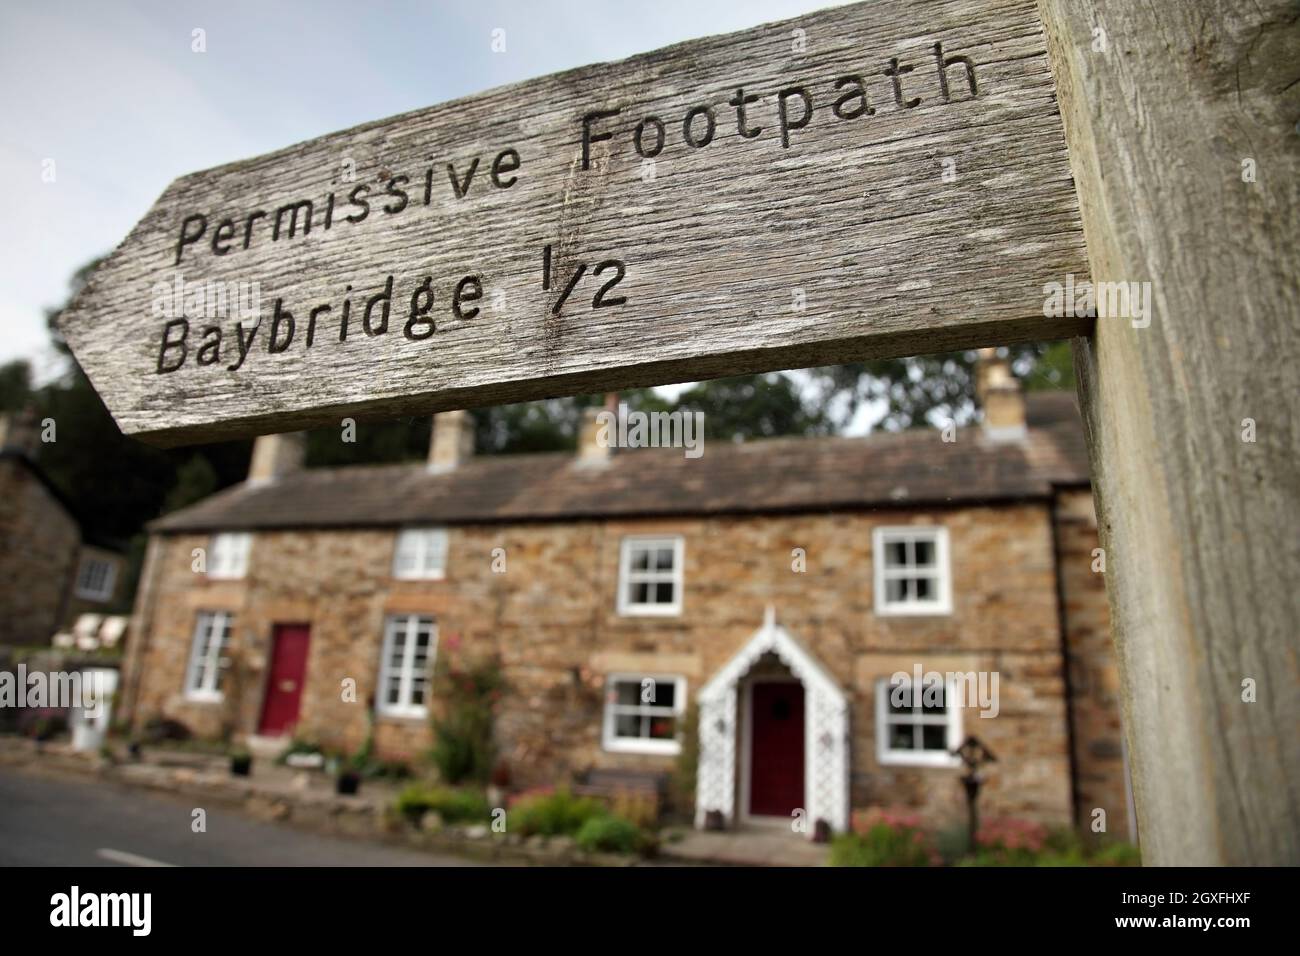 Footpath sign to Baybridge at Blanchland, Northumberland, UK, Stock Photo